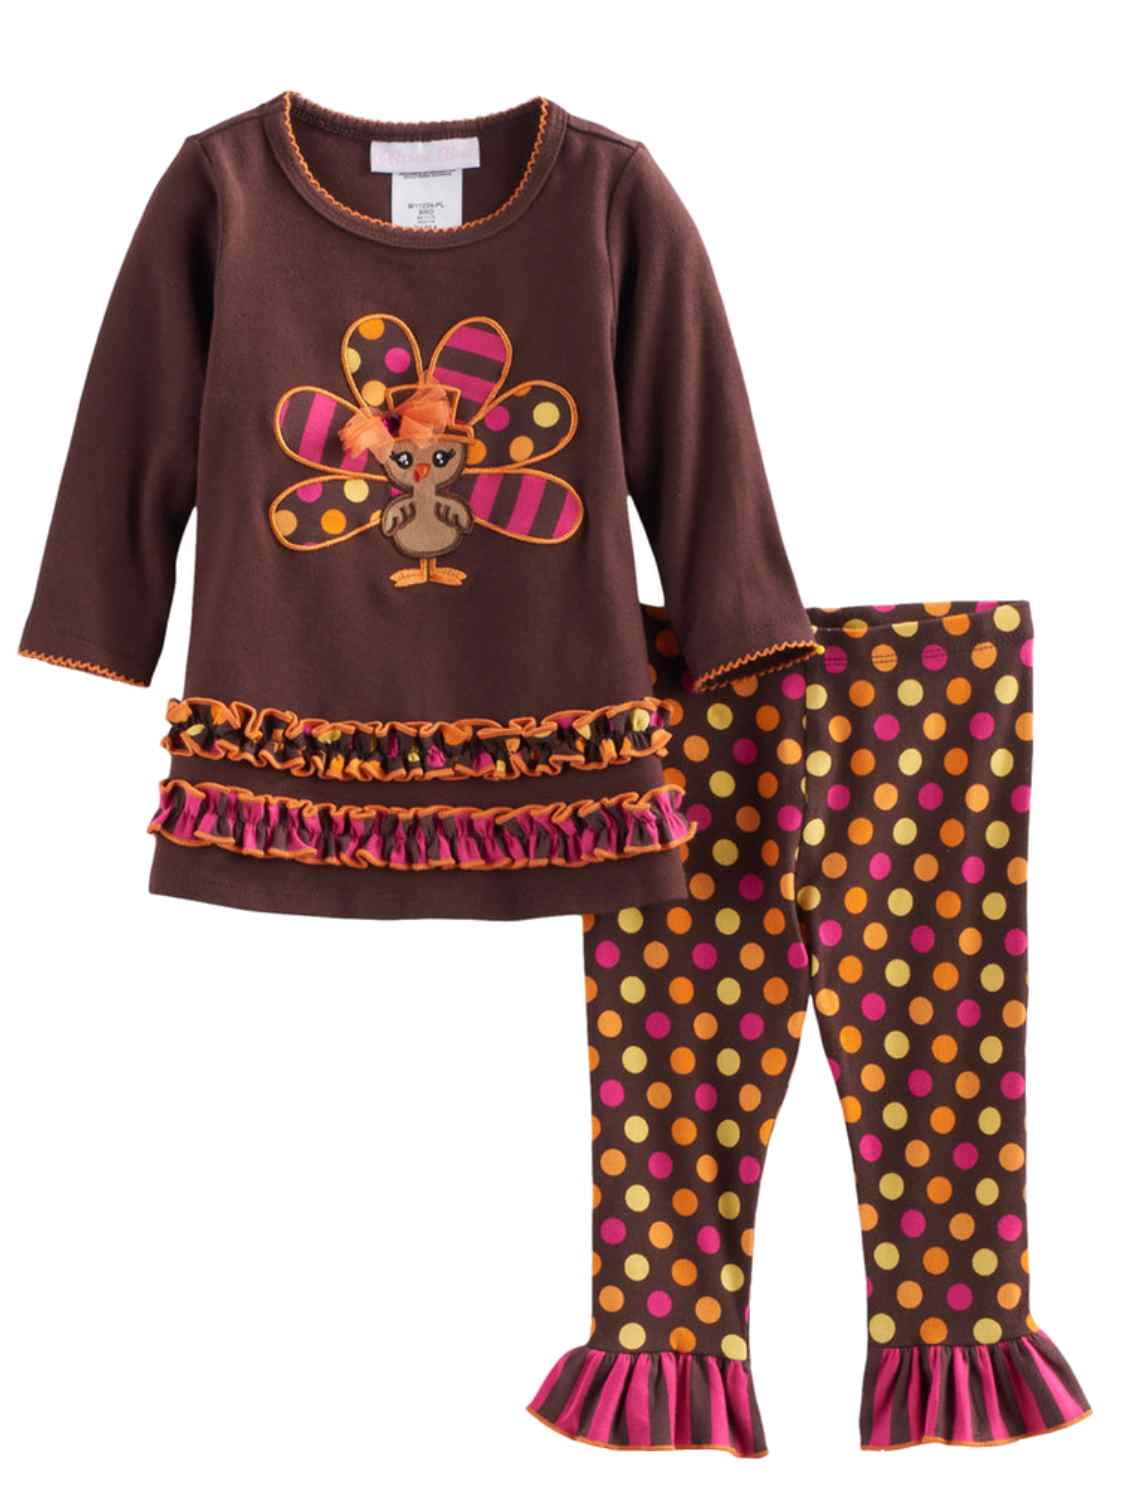 Remiel Store Thanksgiving Toddler Baby Girl Turkey Dress Tops+Pants+Headband 3pcs Outfit Set